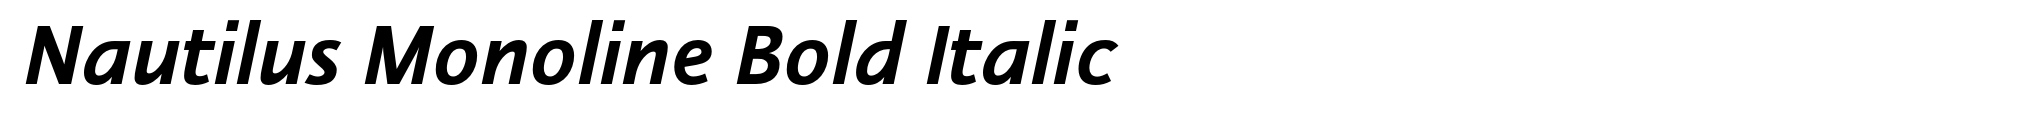 Nautilus Monoline Bold Italic image